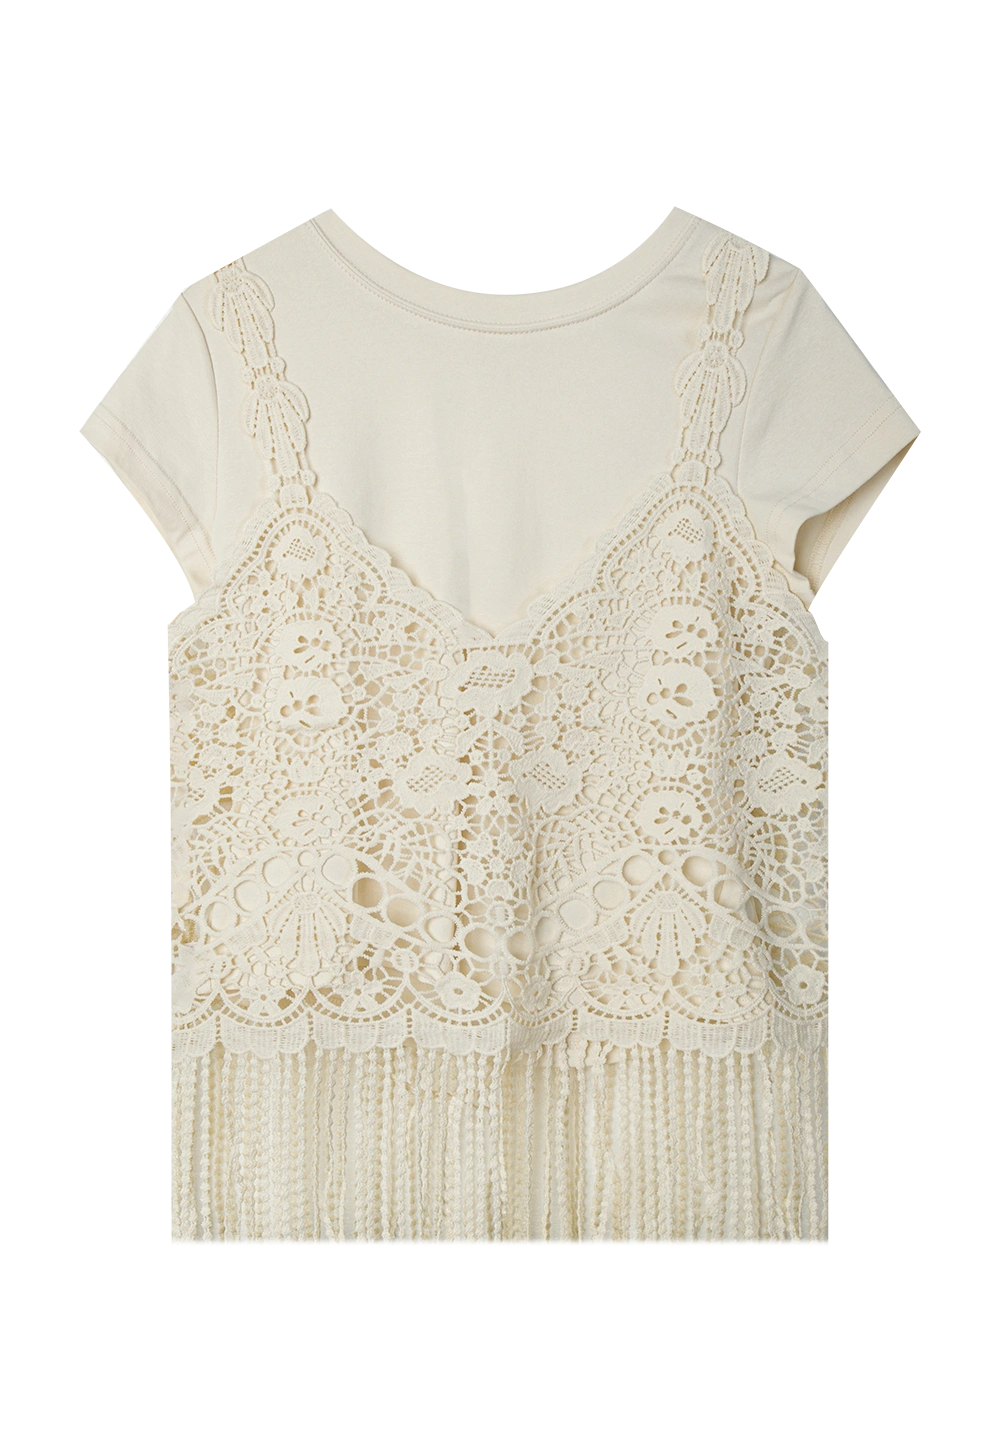 Lace Overlay Crochet Bodice T-Shirt